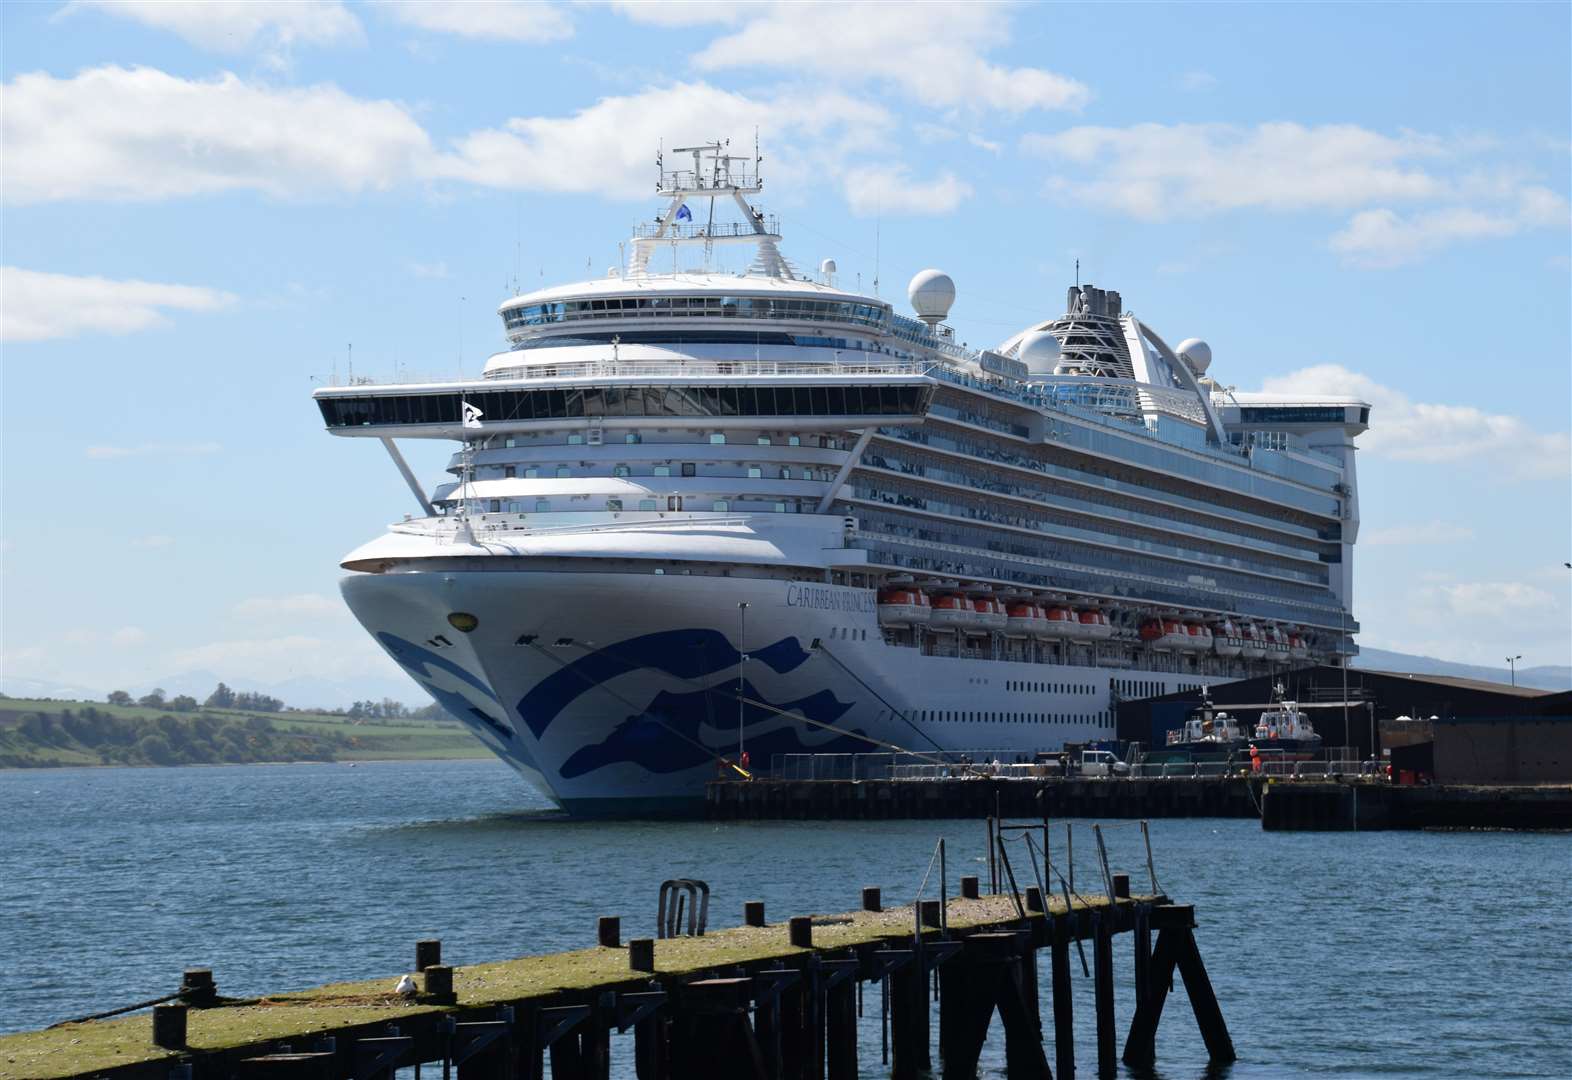 The Caribbean Princess cruise ship at dock in Invergordon.